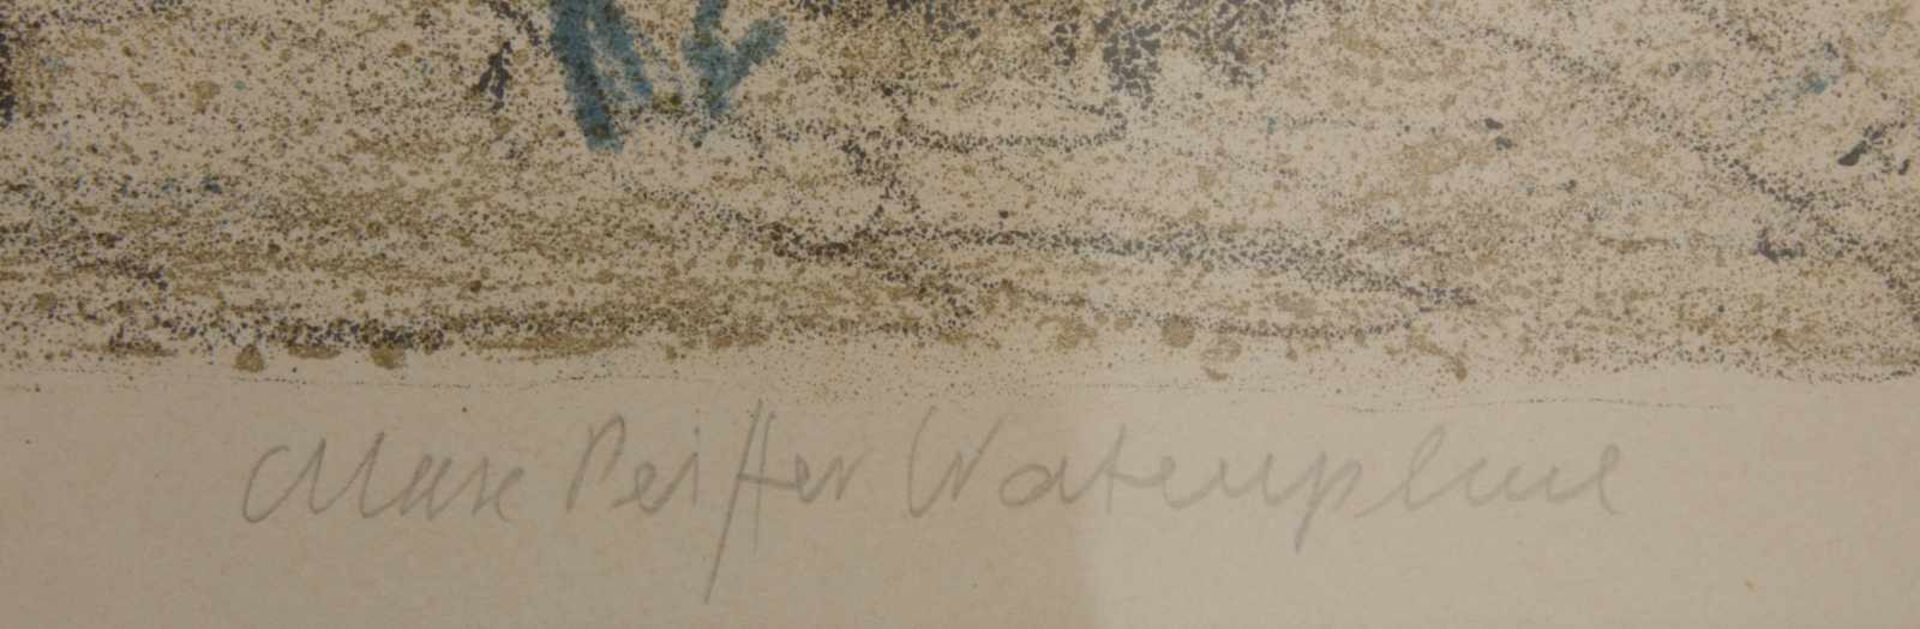 M.P. WATENPHUL, Stromboli, Farblithografie, Deutscholand, 20.Jh.Max PEIFFER-WATENPHUL (1896-1976) - Bild 3 aus 5